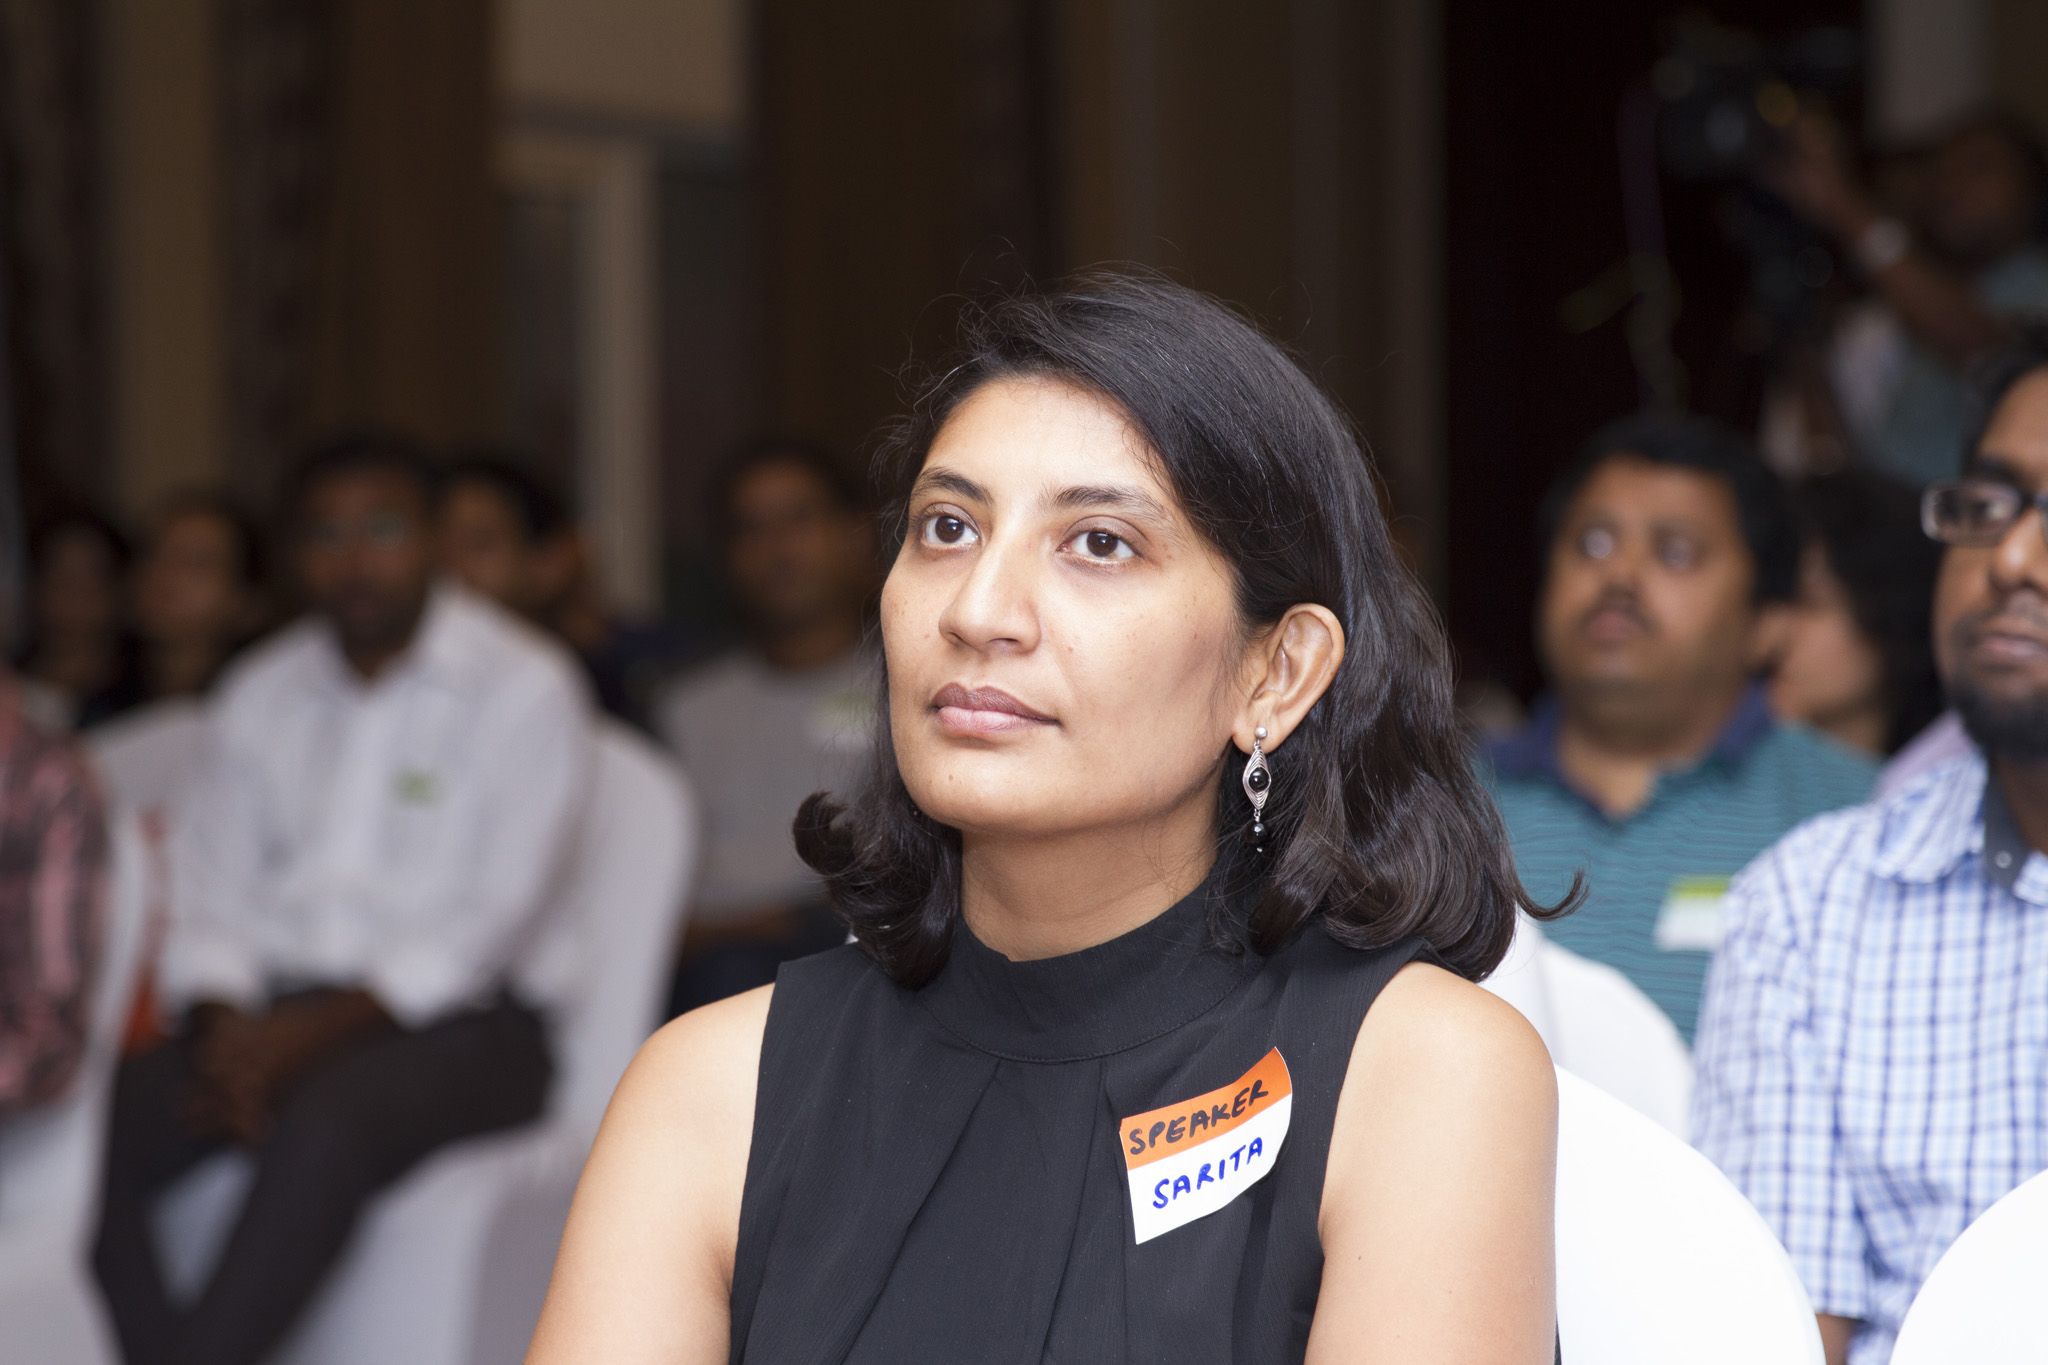 Data and analytics key to making quick decisions — Sarita Digumarti spills her secret to success